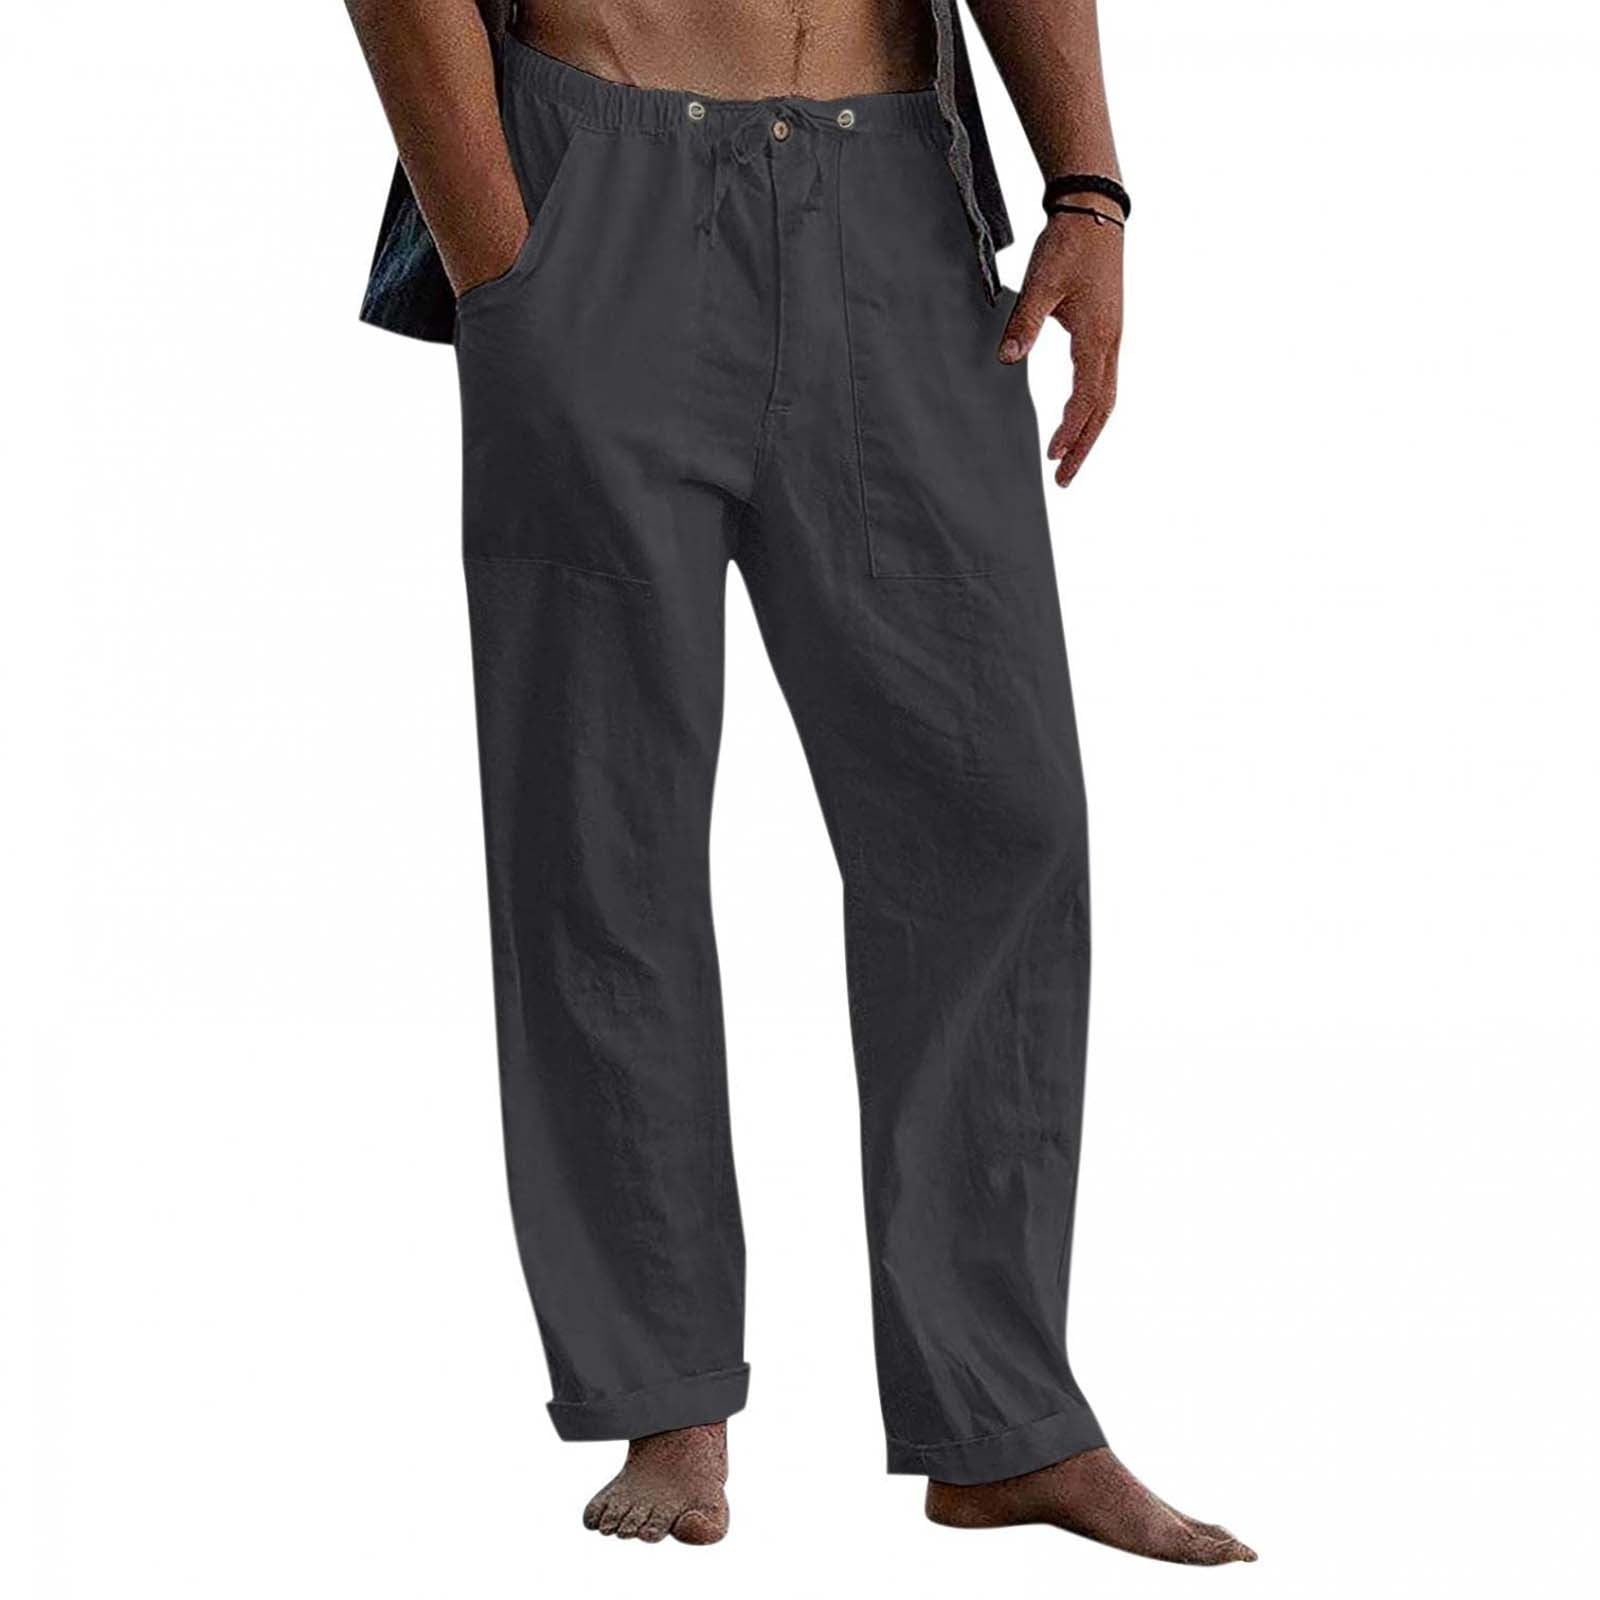 Ayolanni Dark Gray Drawstring Elastic Pants for Men Cotton Carpenter ...